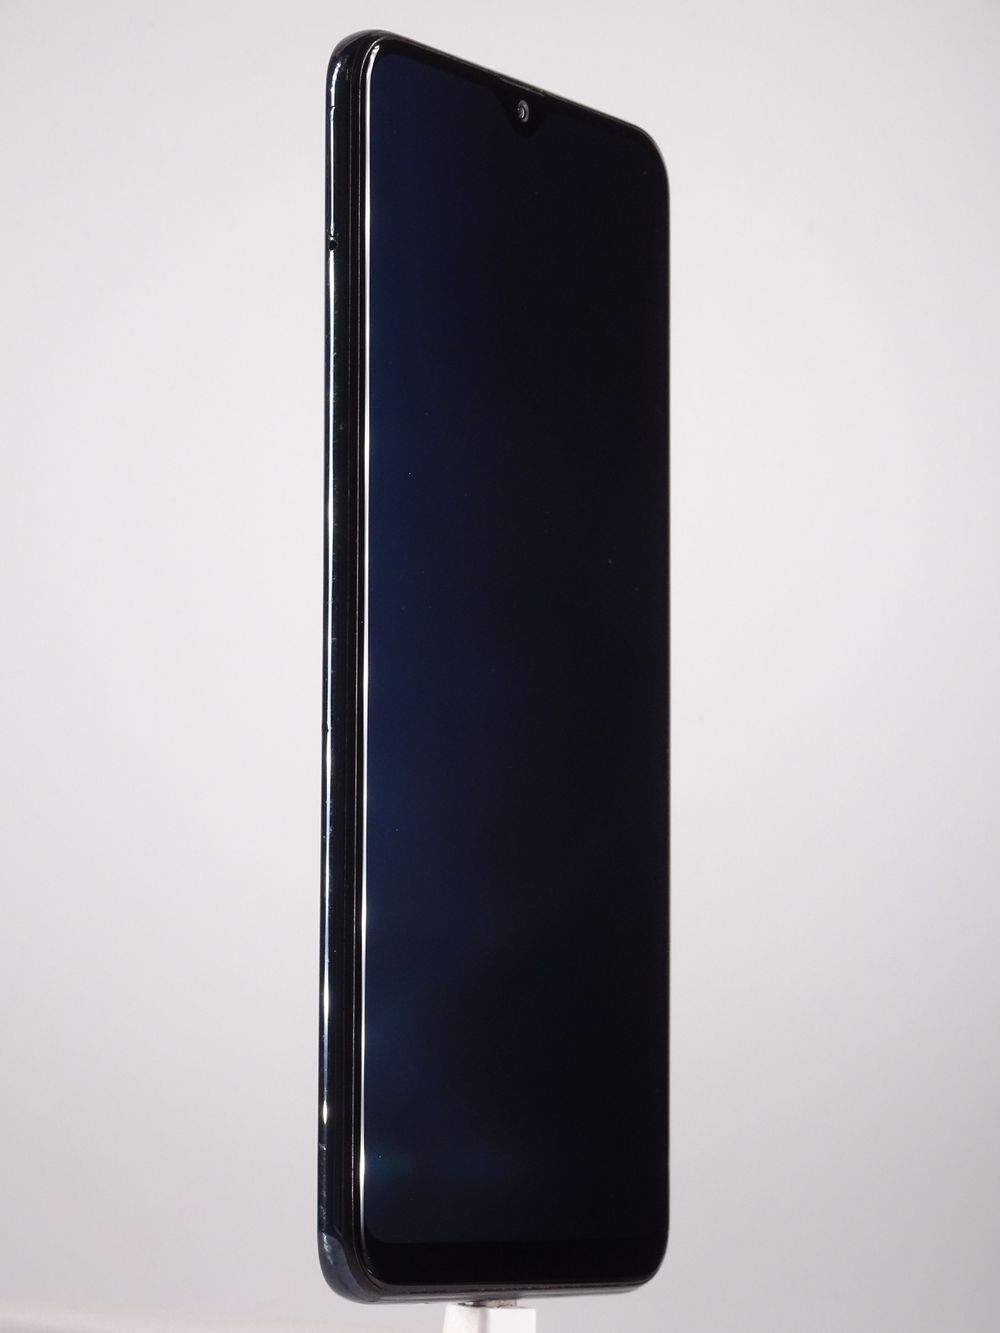 Mobiltelefon Samsung Galaxy A30S Dual Sim, Black, 32 GB, Excelent